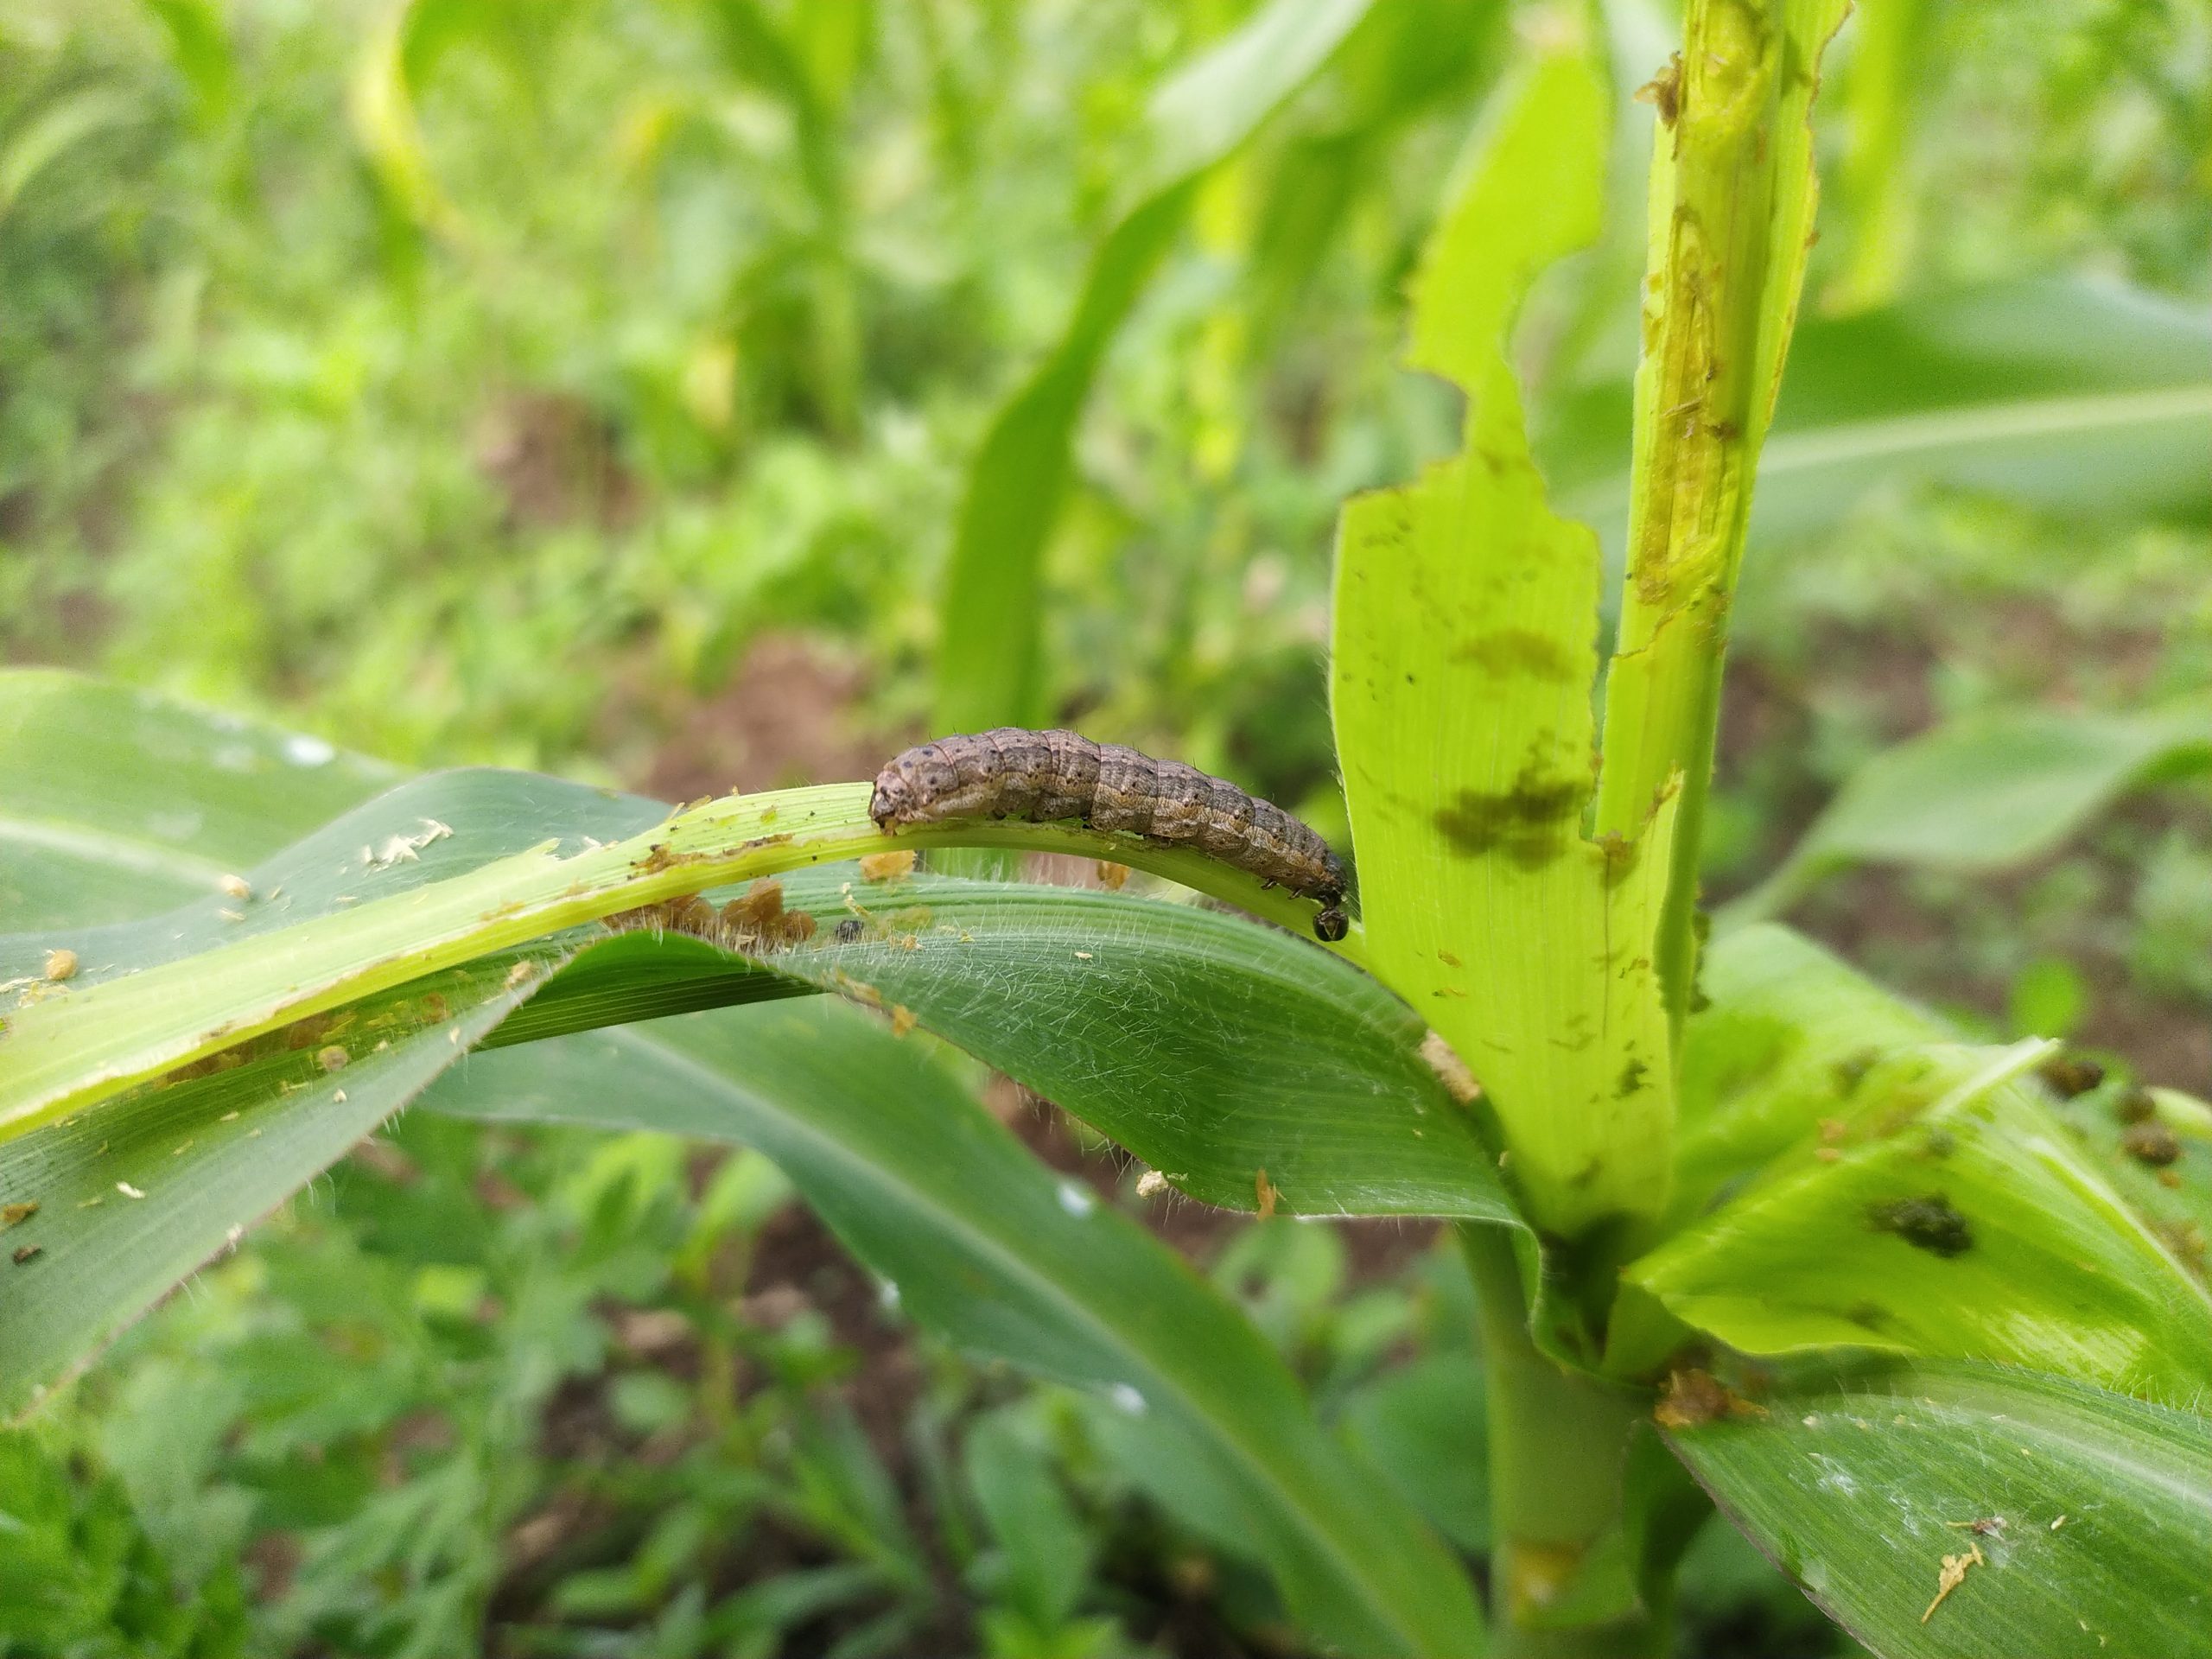 A caterpillar on maize plant